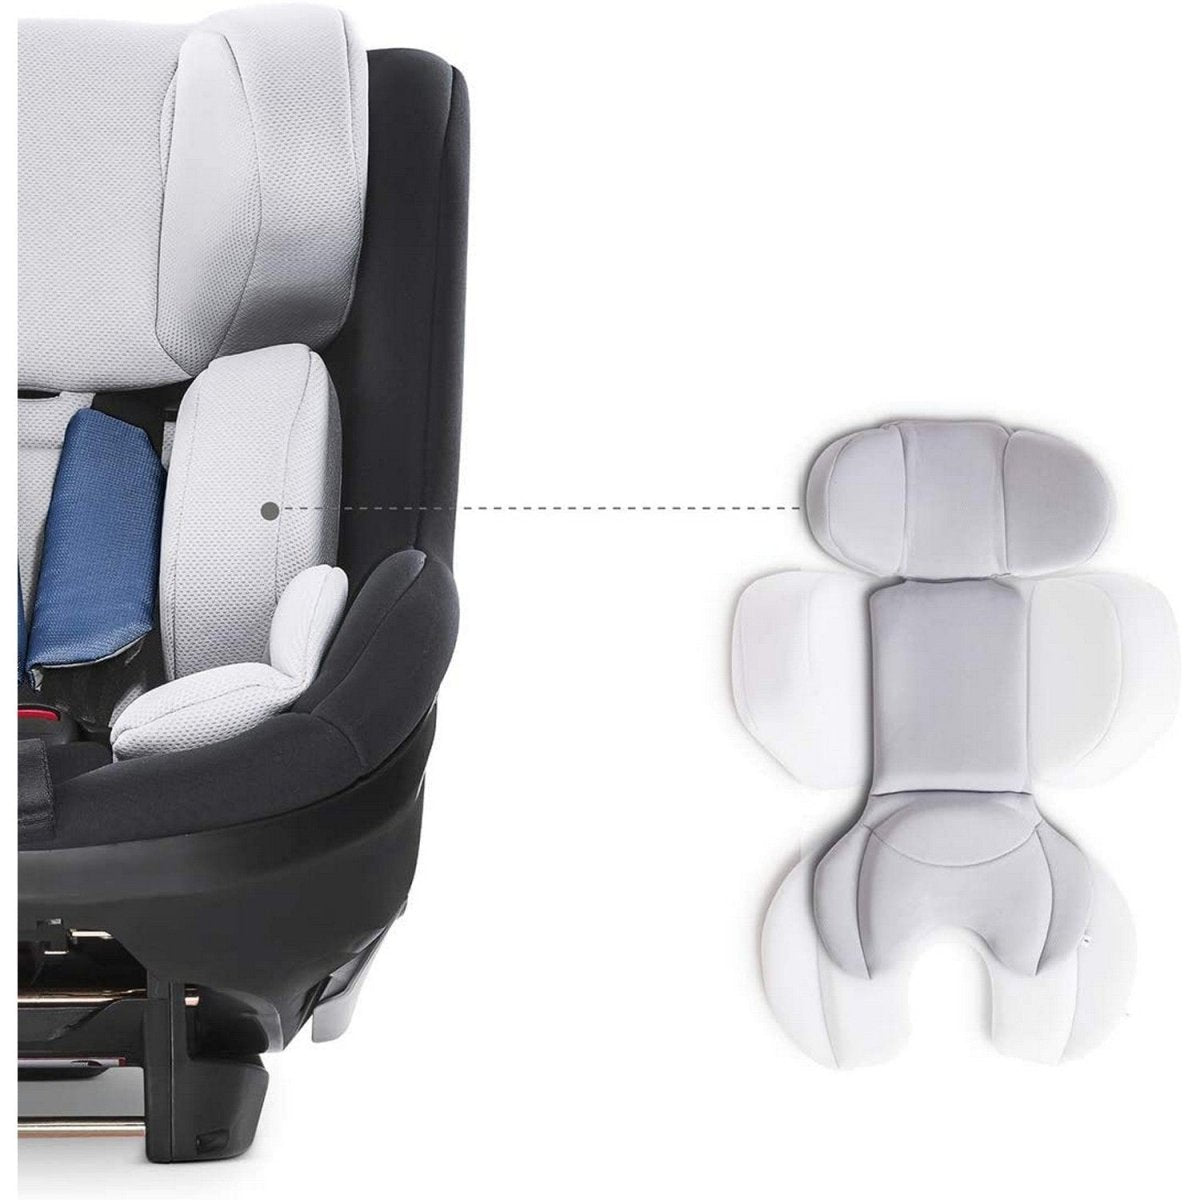 Hauck Ipro Kids Convertible Car Seat For Baby & Kids- Denim - 614174